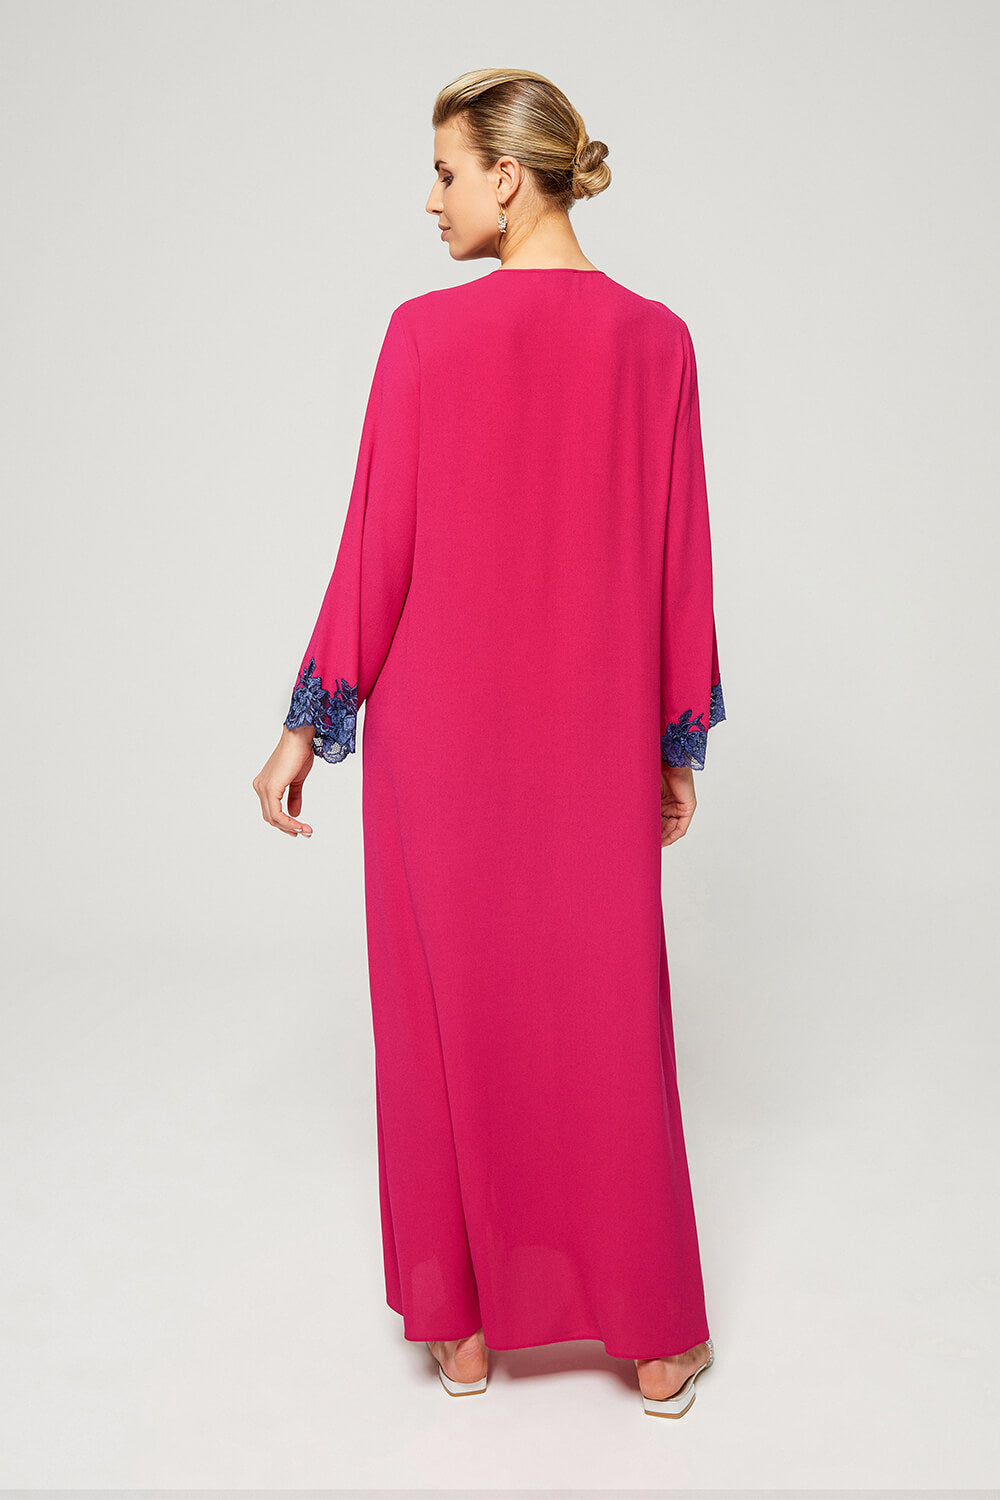 Lami Luxury Trimmed Rayon Crepe Full Length Dress - Fuchsia